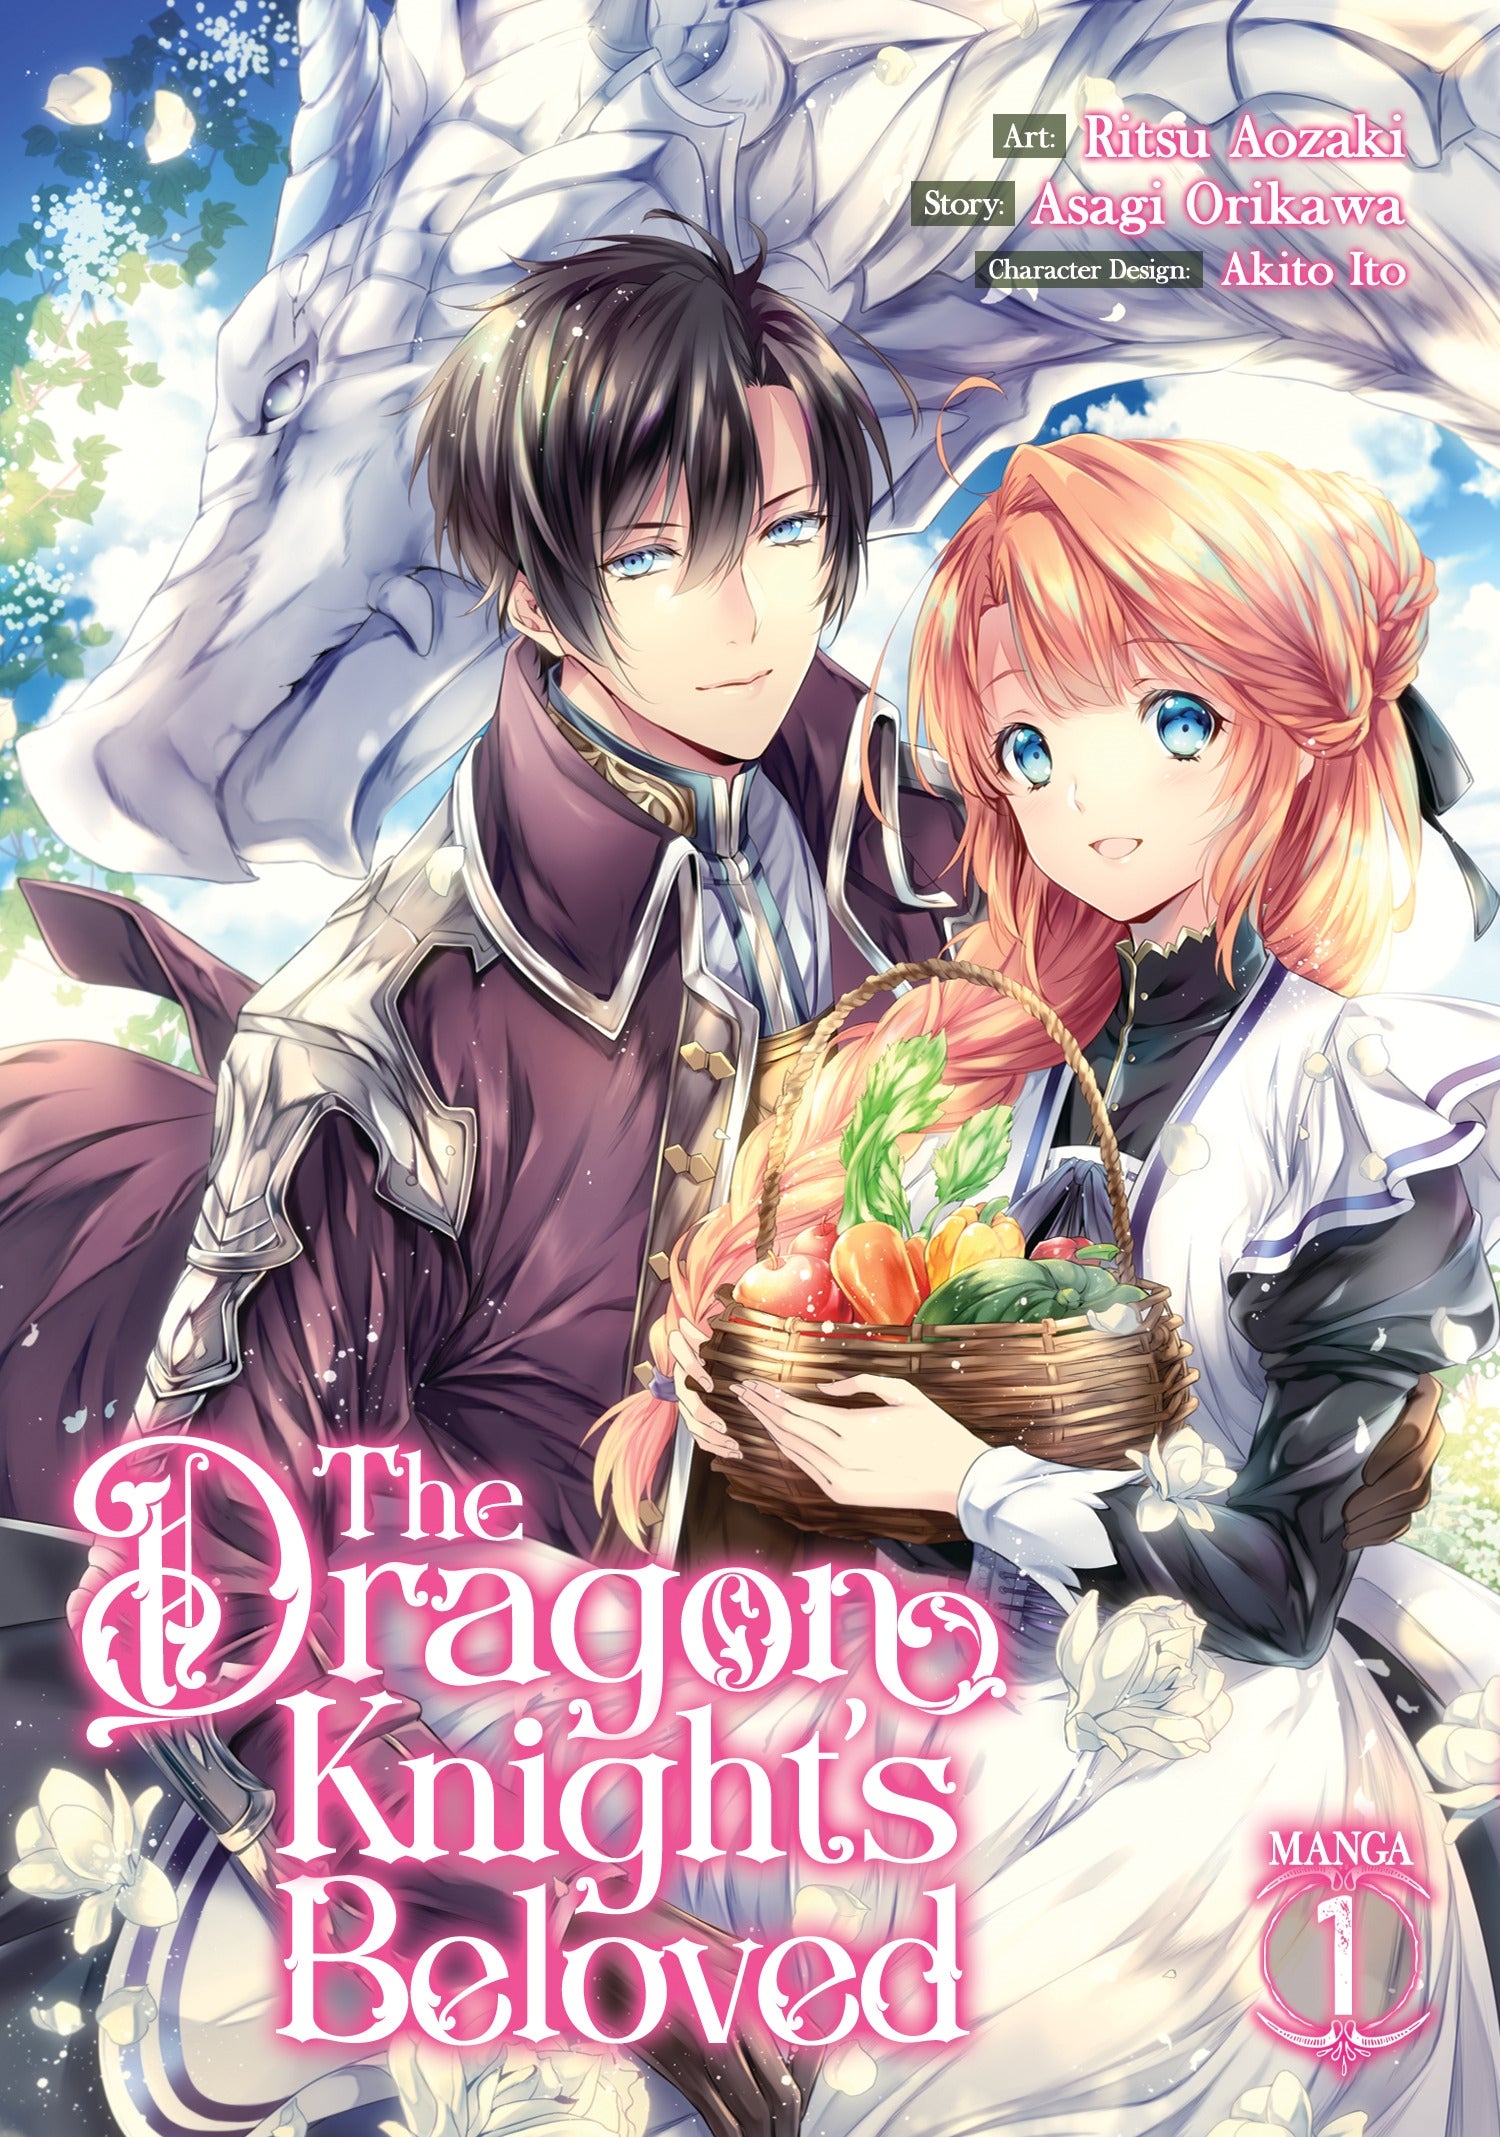 The Dragon Knight's Beloved (Manga) Vol. 1 - Manga Warehouse